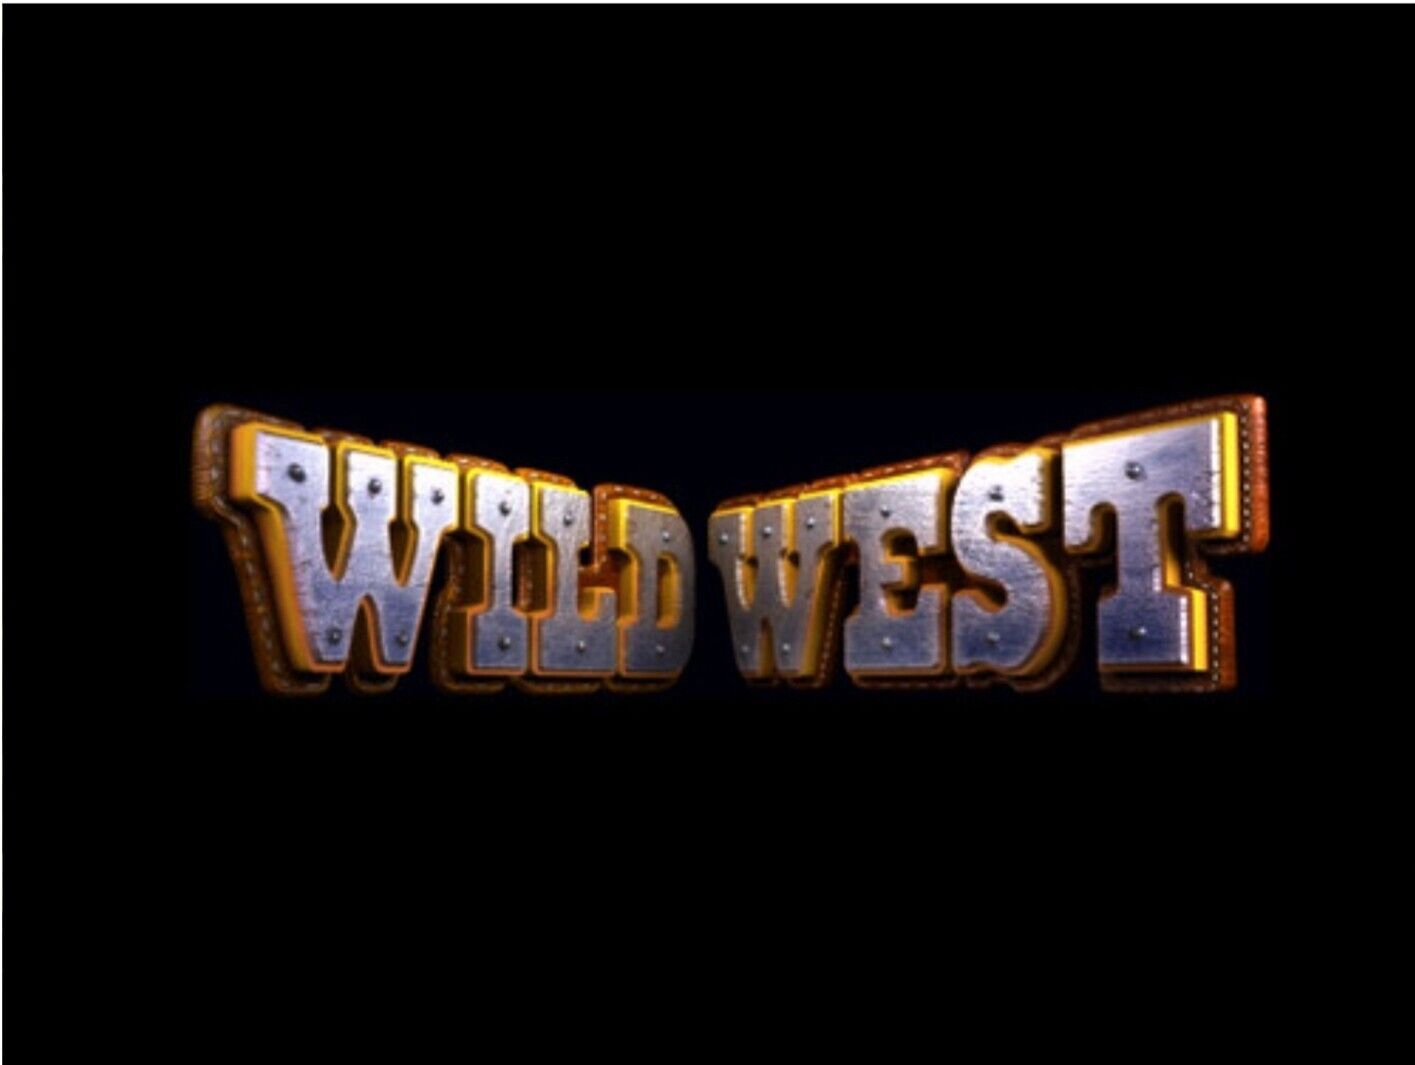 Astro Wild West Video Game Board